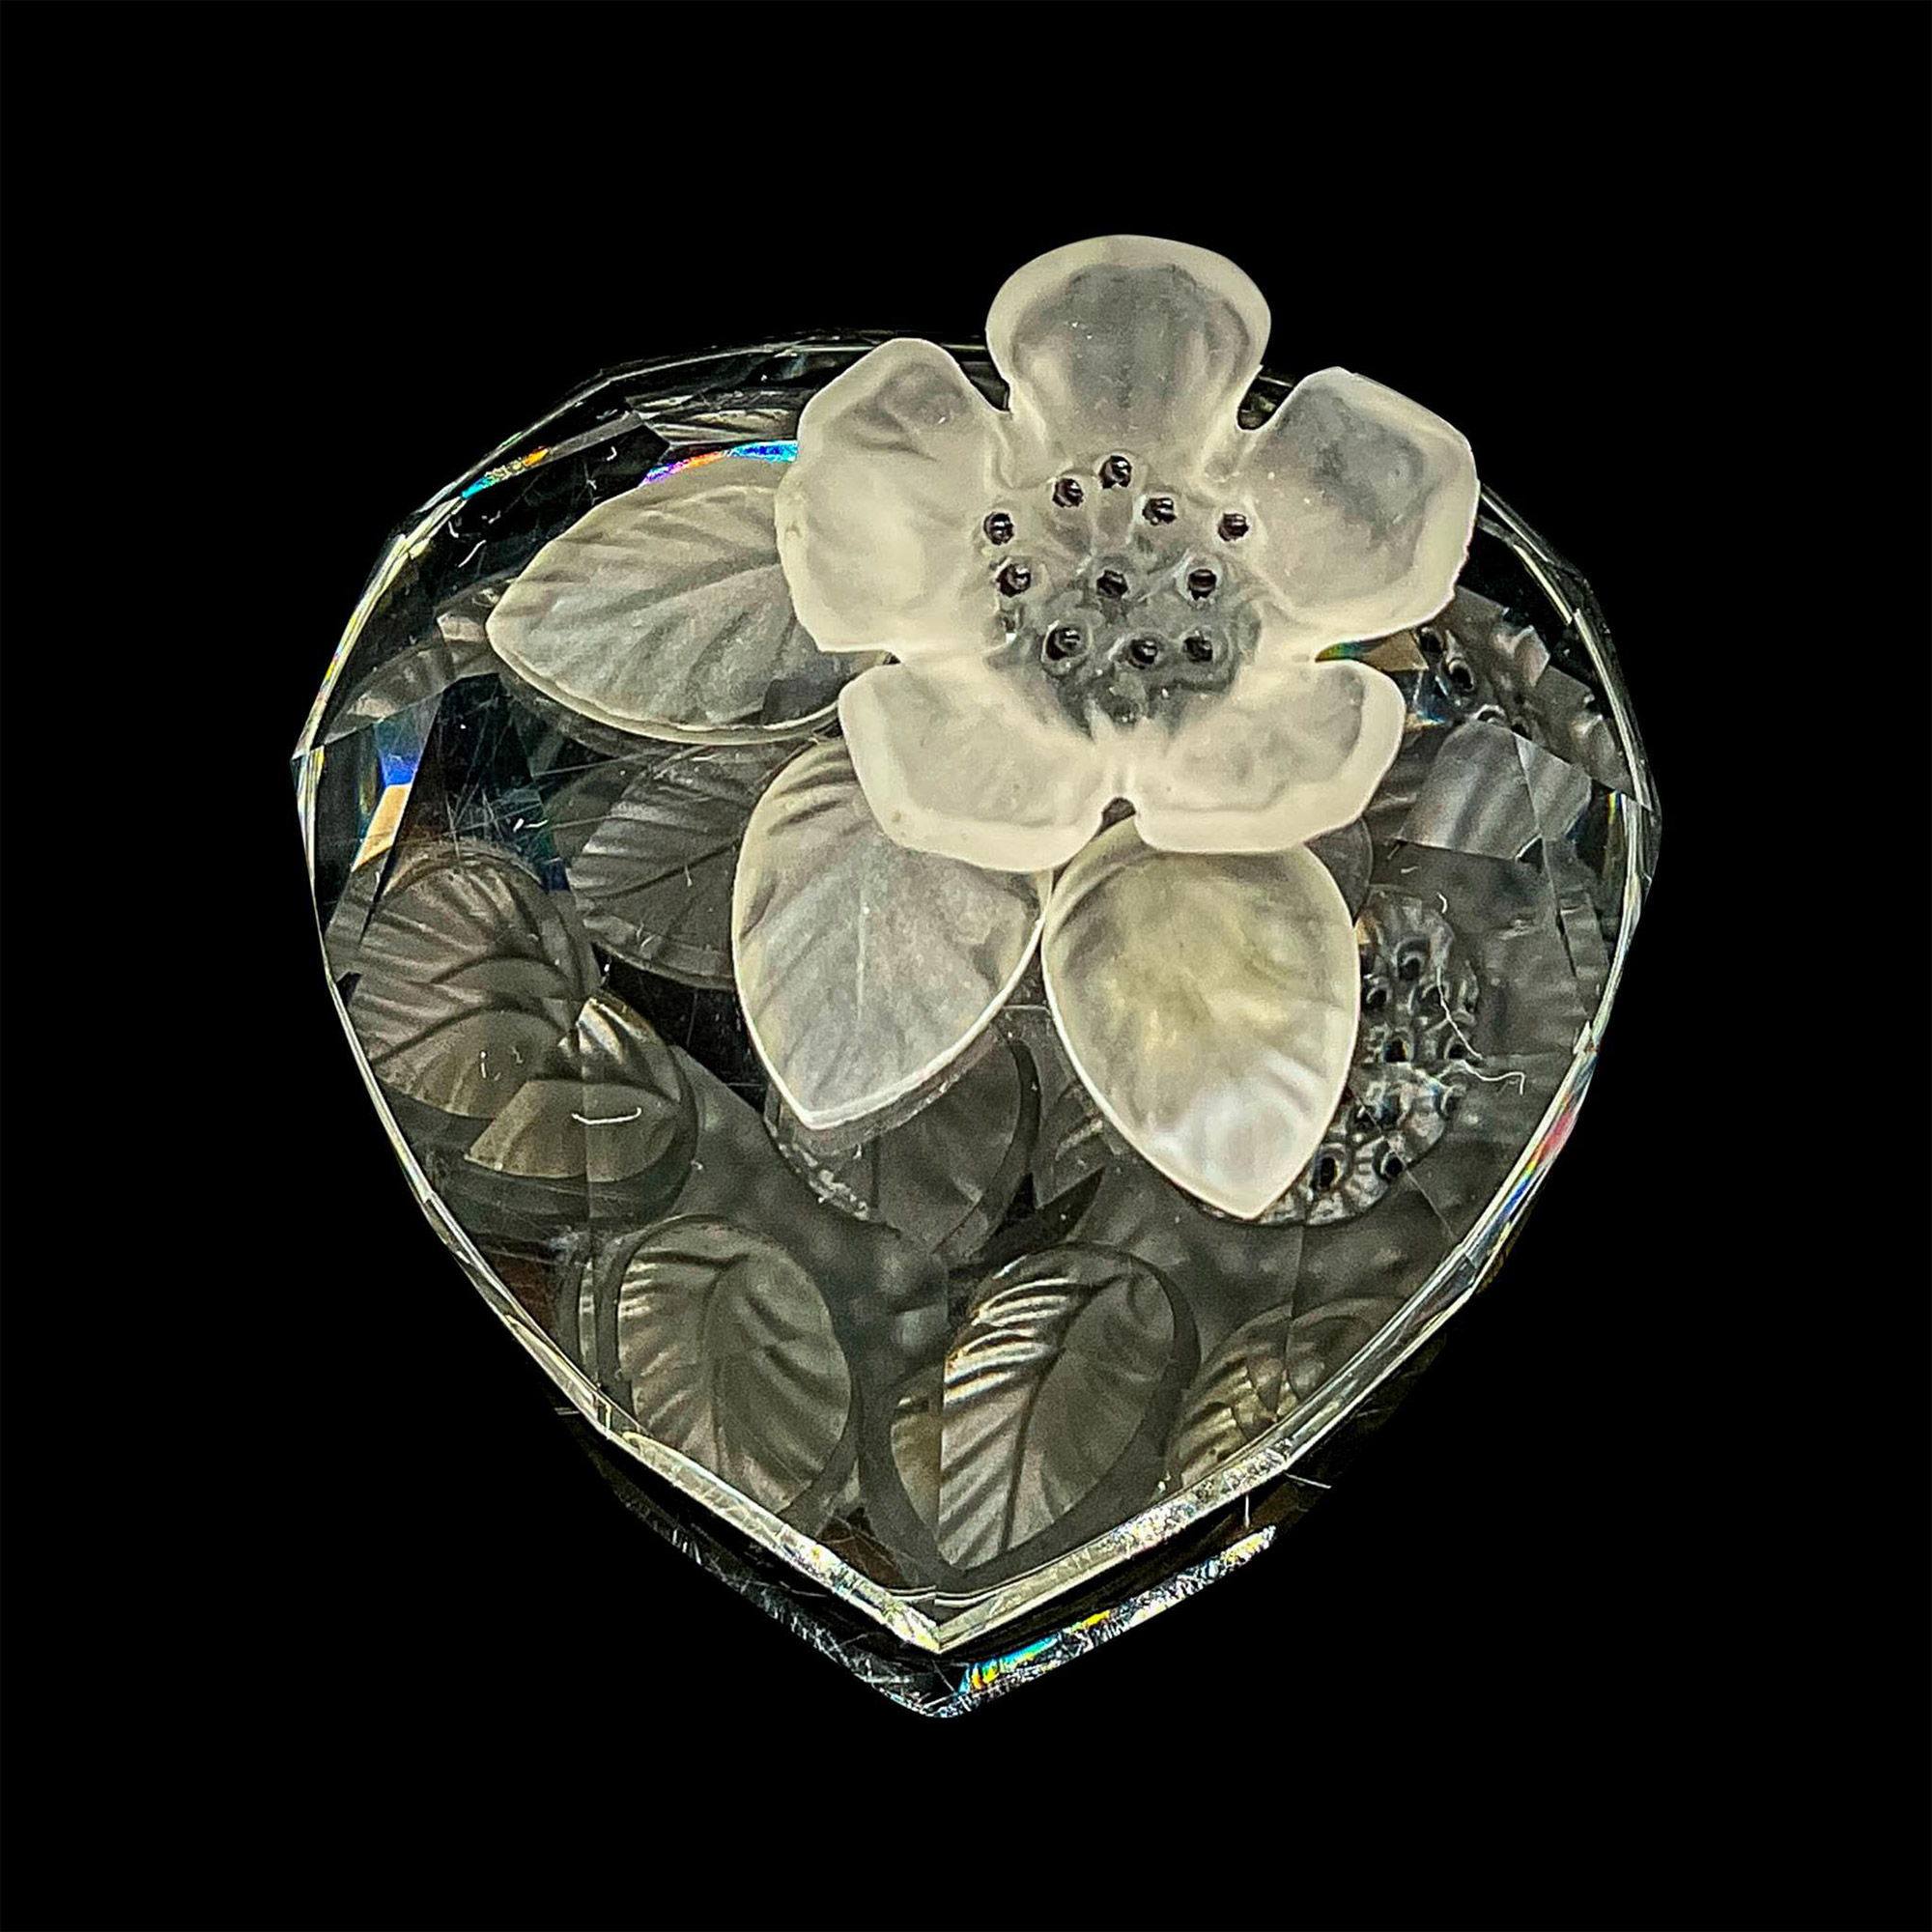 Swarovski Crystal Treasure Box, Heart Shaped w/Flower - Image 4 of 5